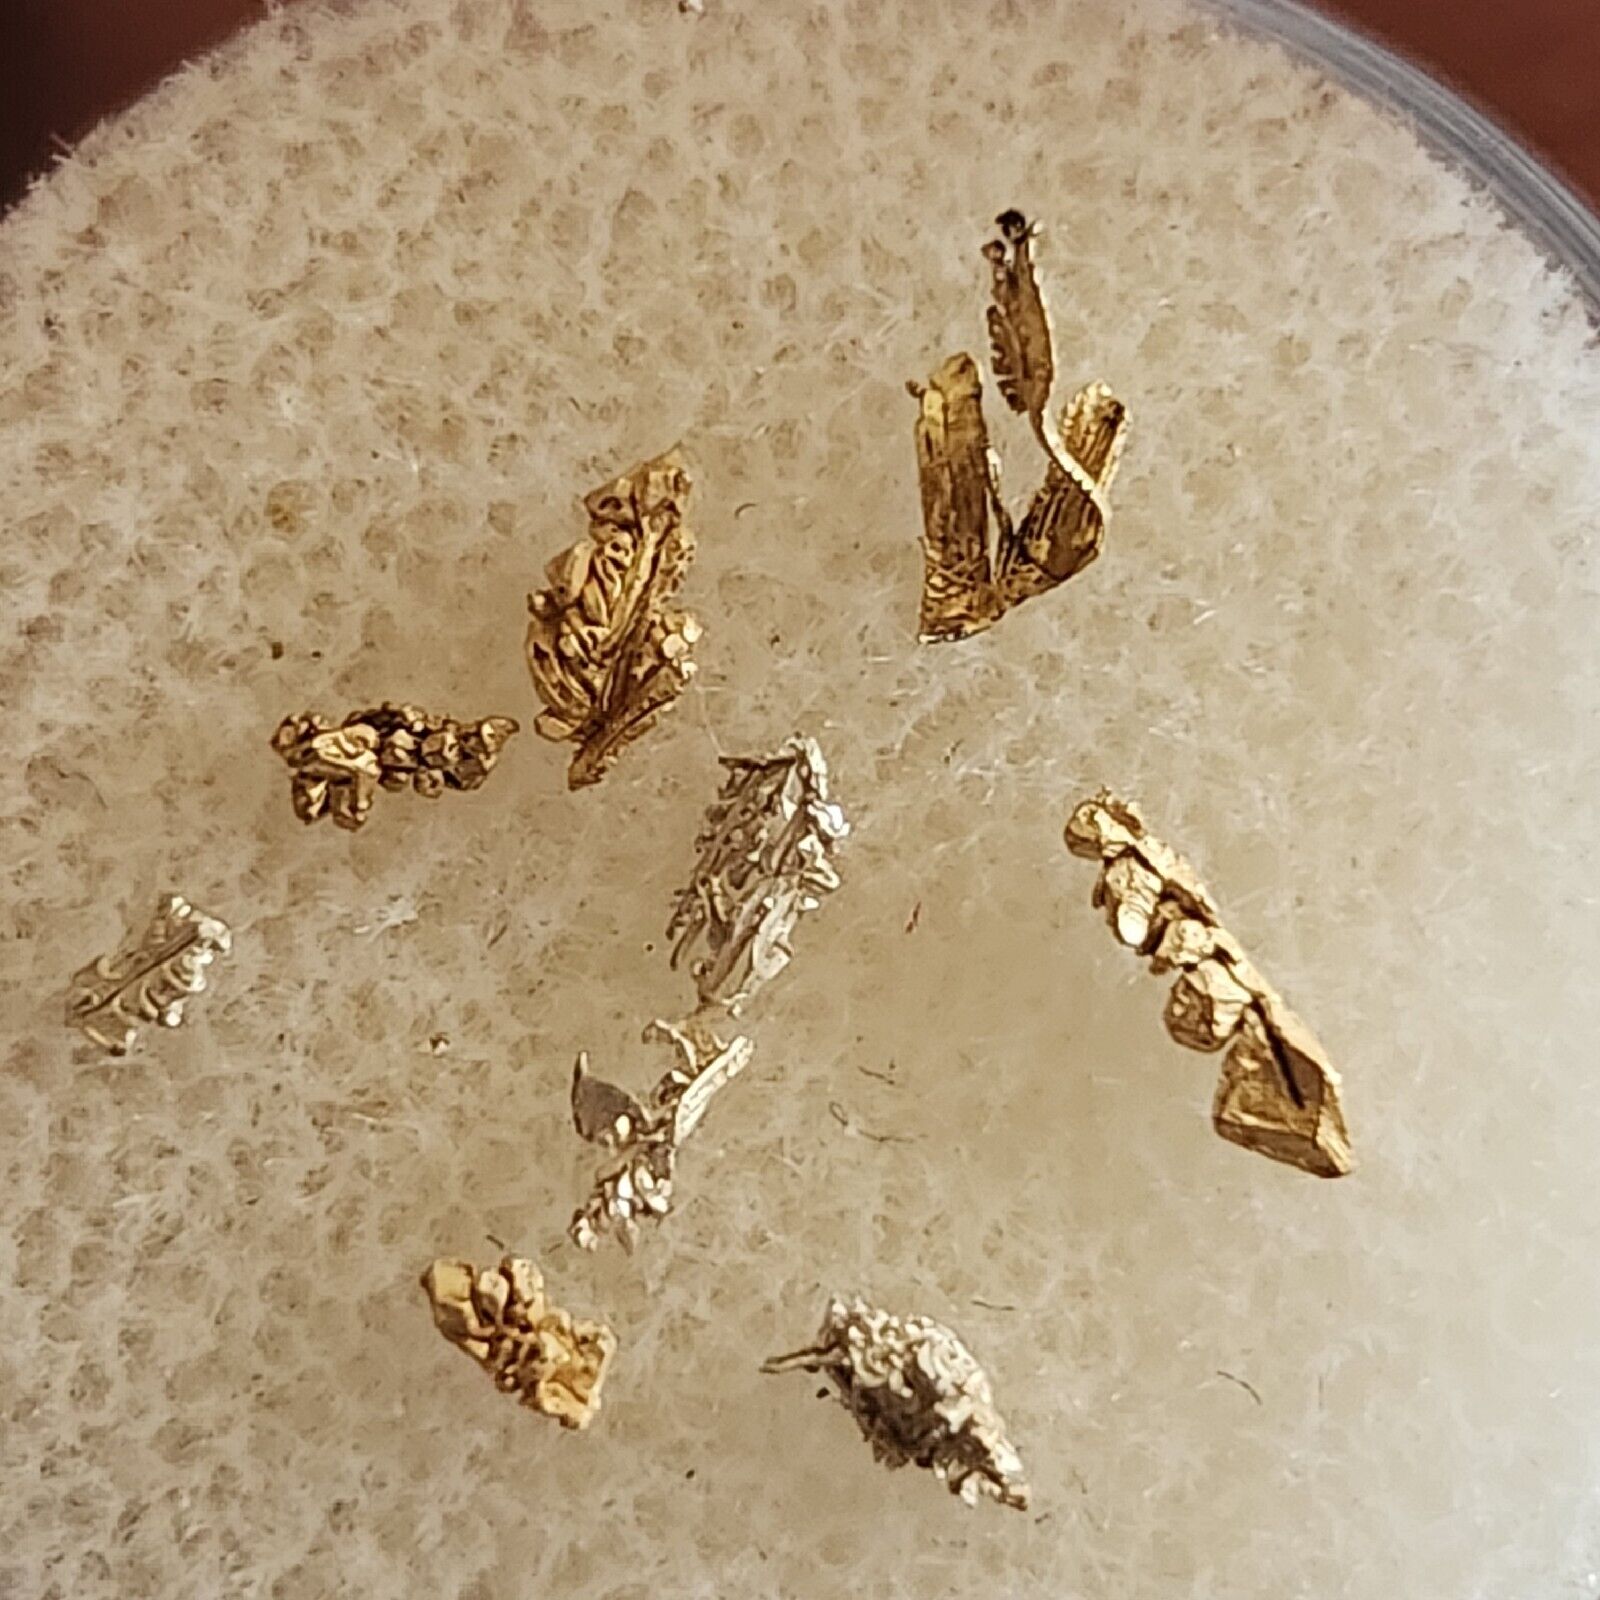 Native Gold Wire Crystallized Gold Quartz nugget specimen Collector Lot #20 8pcs